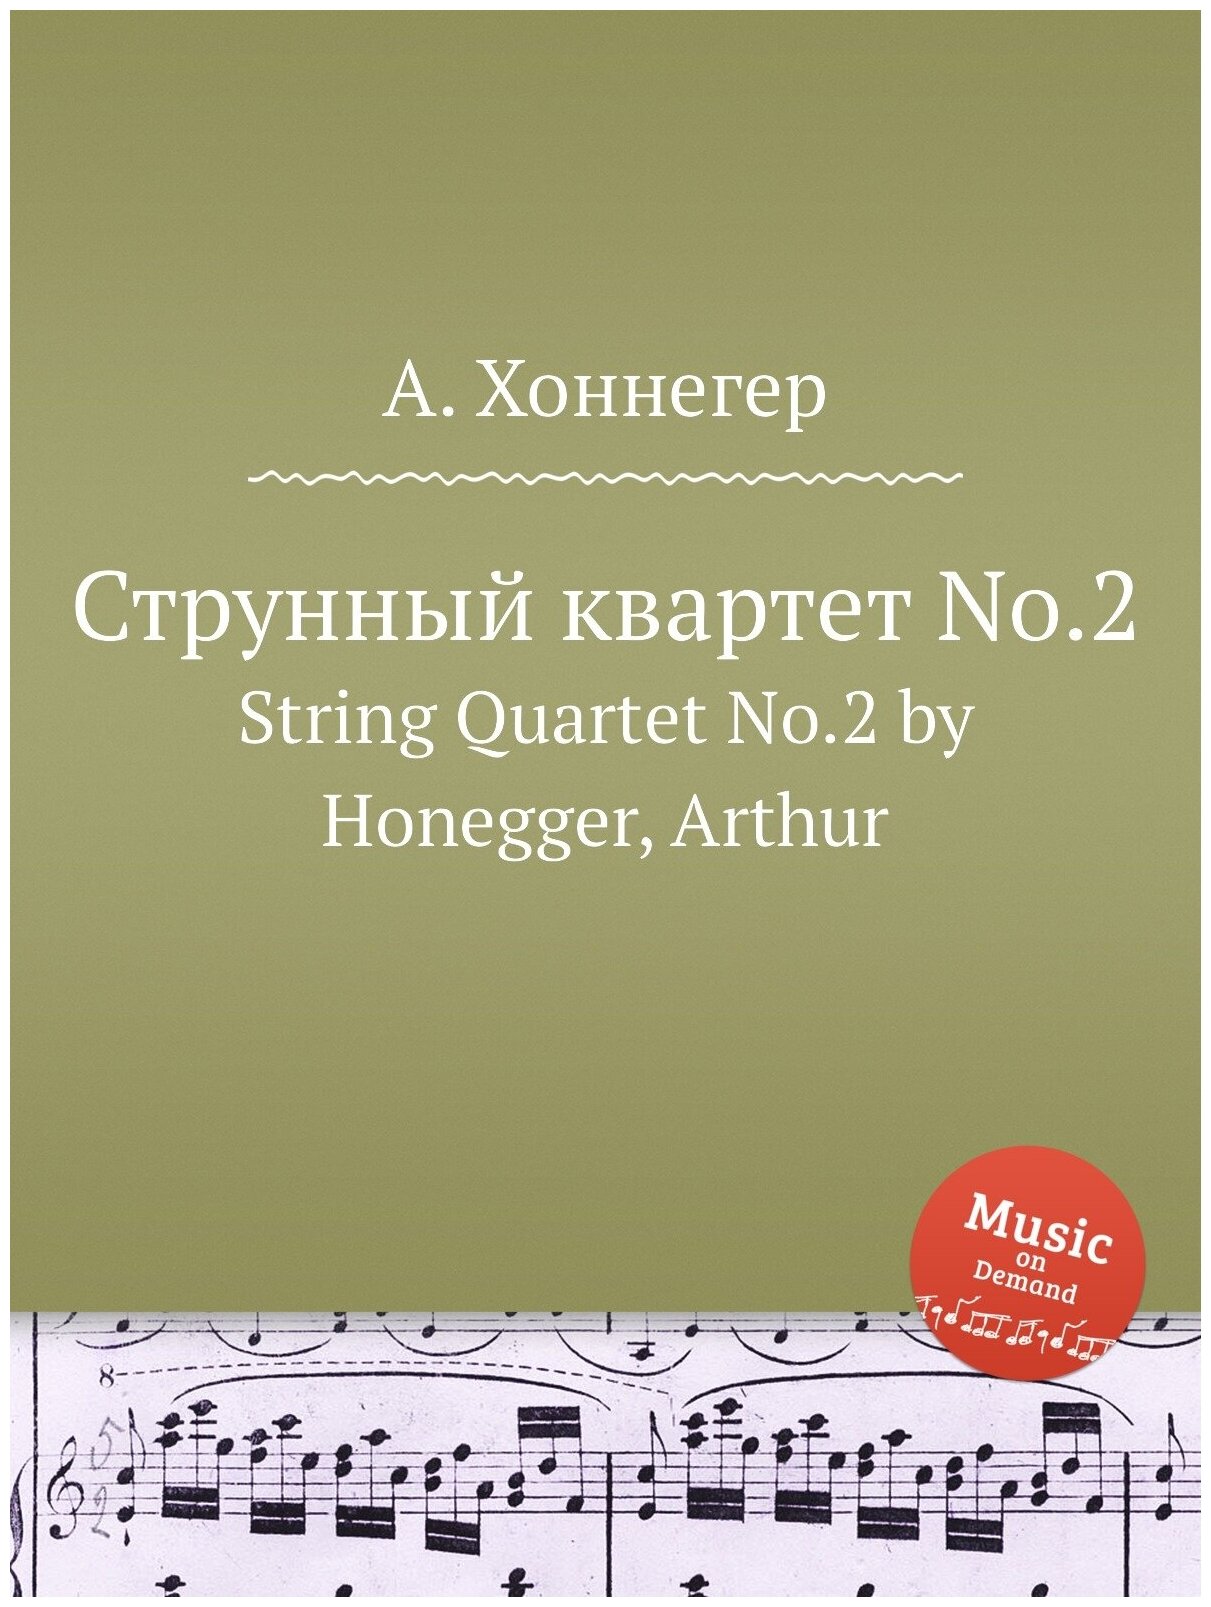 Струнный квартет No.2. String Quartet No.2 by Honegger, Arthur